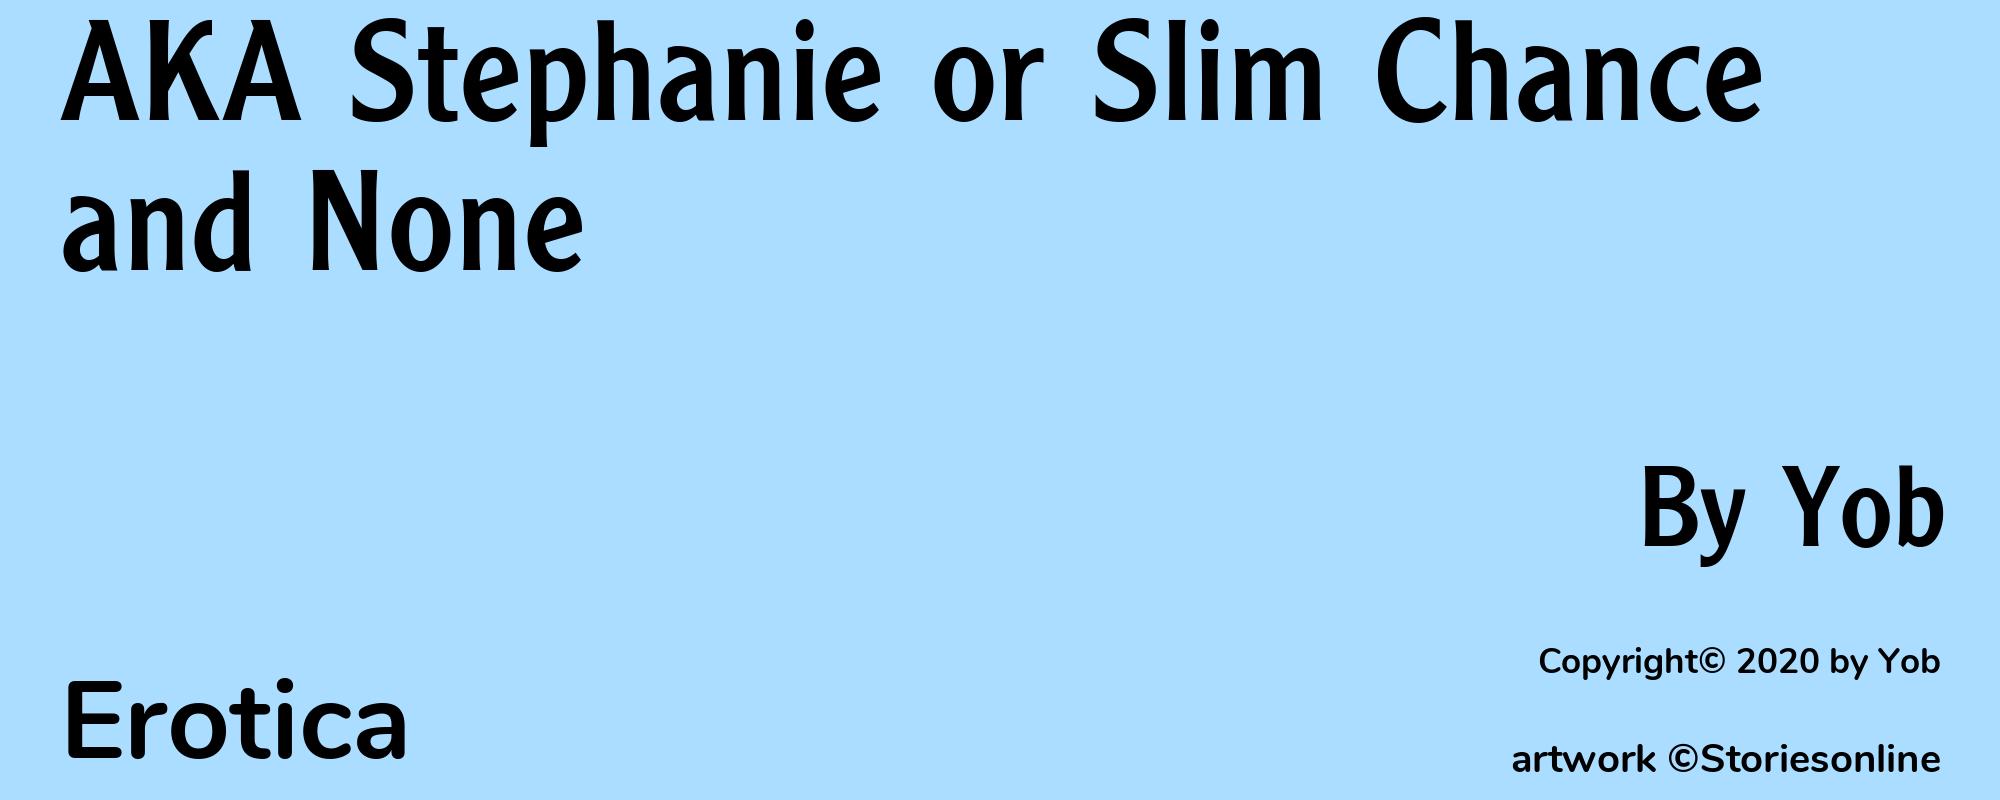 AKA Stephanie or Slim Chance and None - Cover